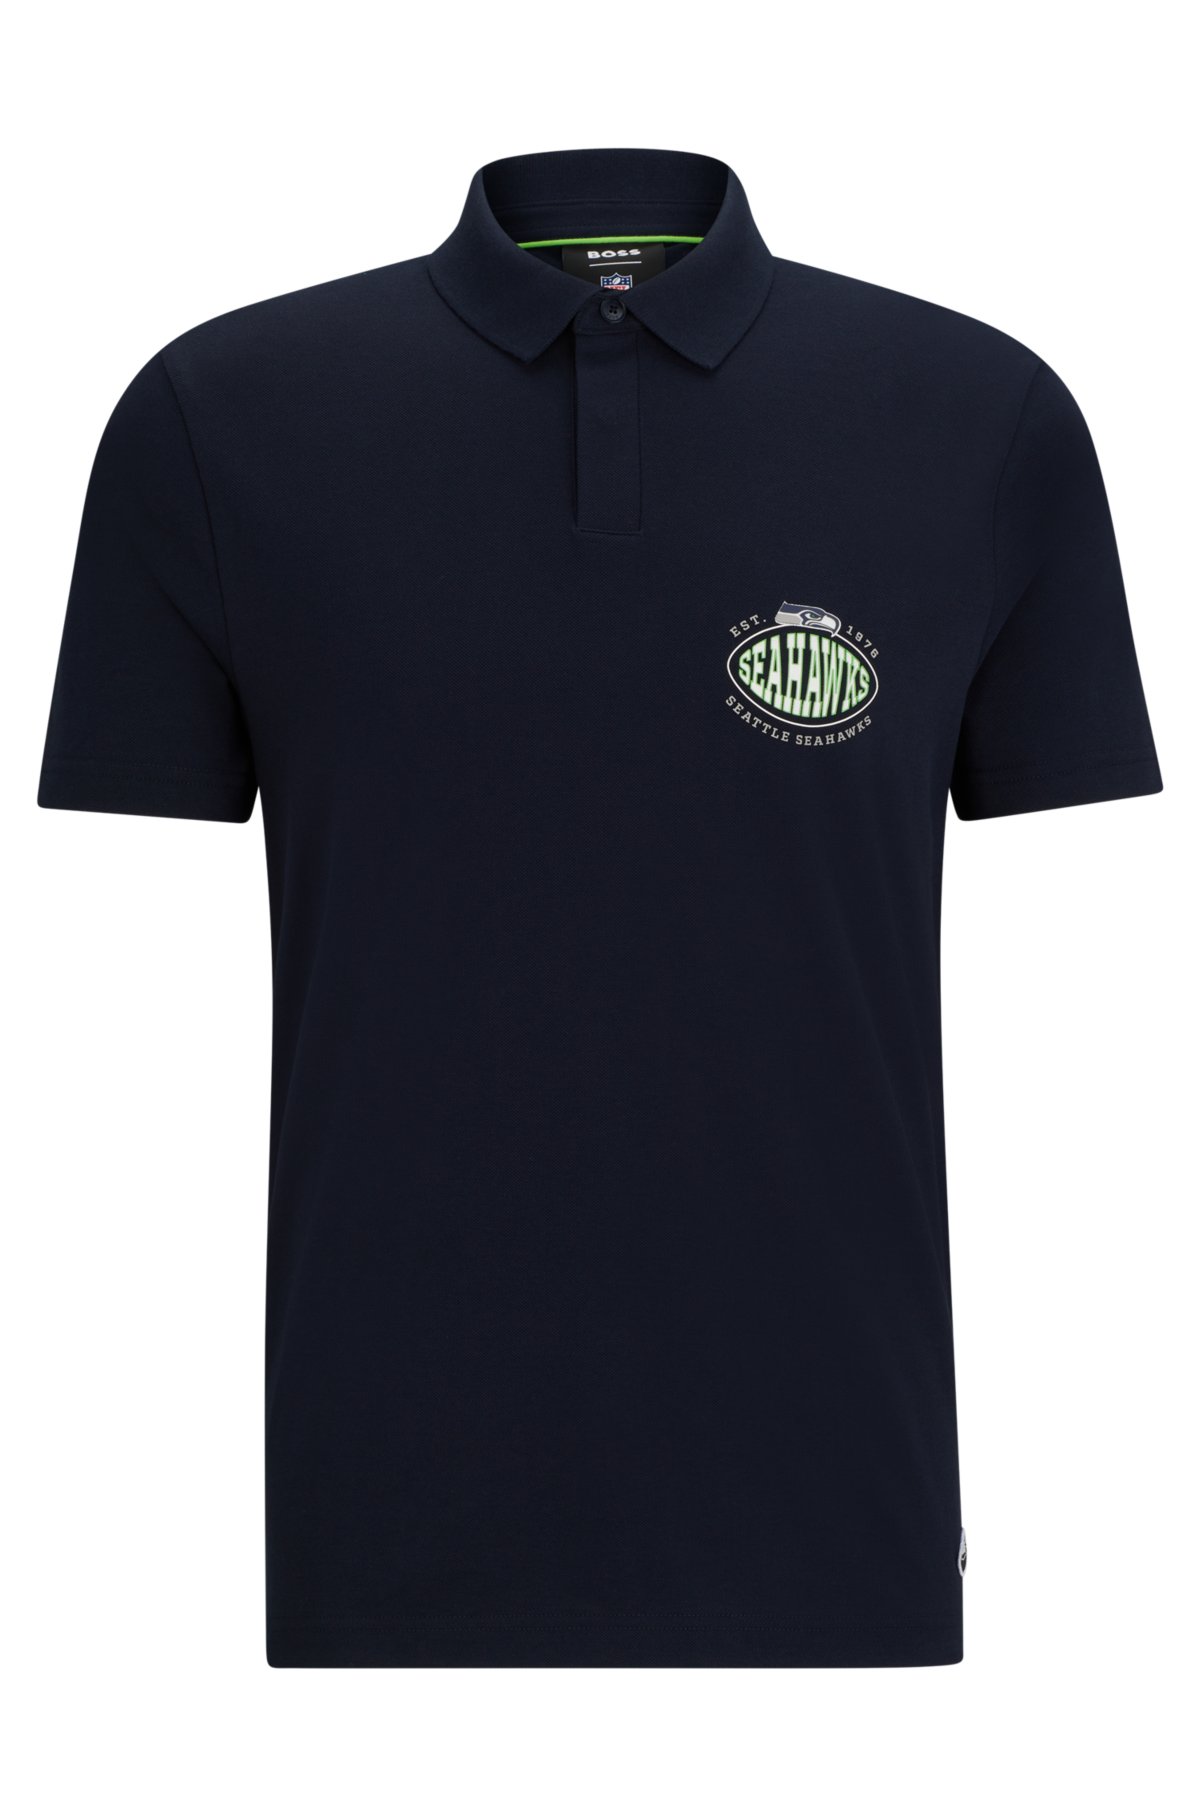 BOSS x NFL cotton-piqué polo shirt with collaborative branding, Seahawks